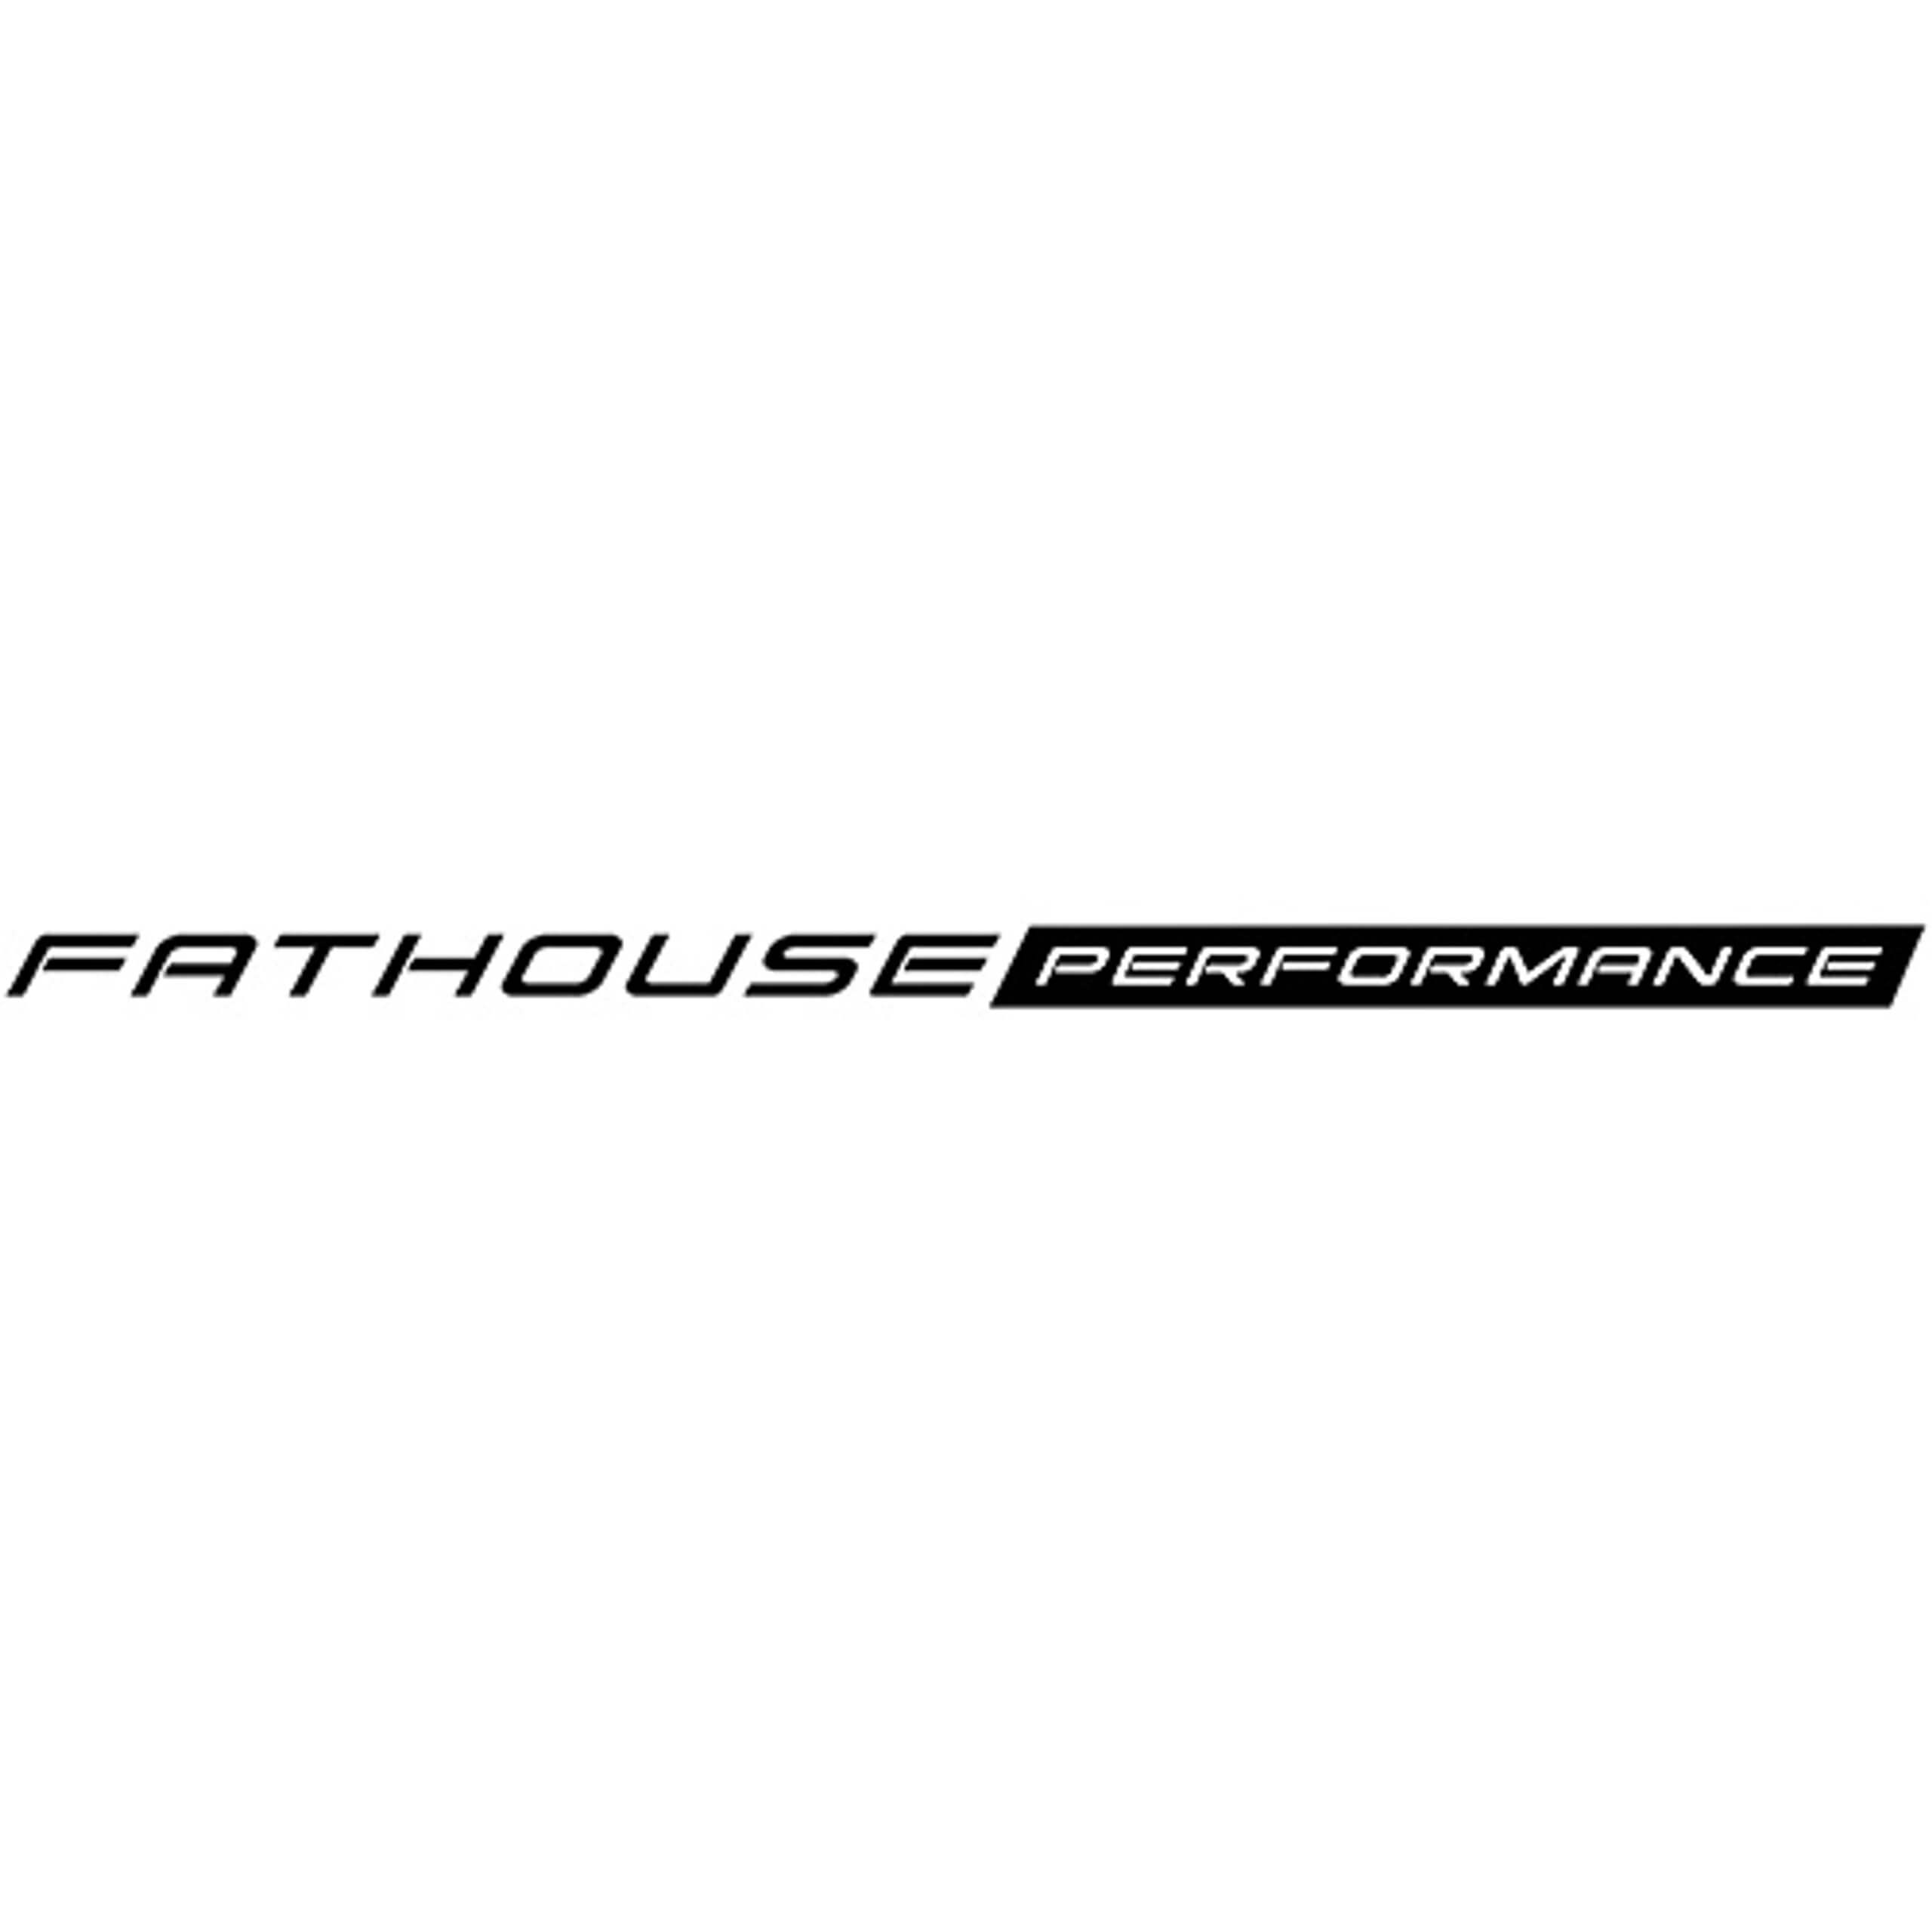 Fathouse Performance